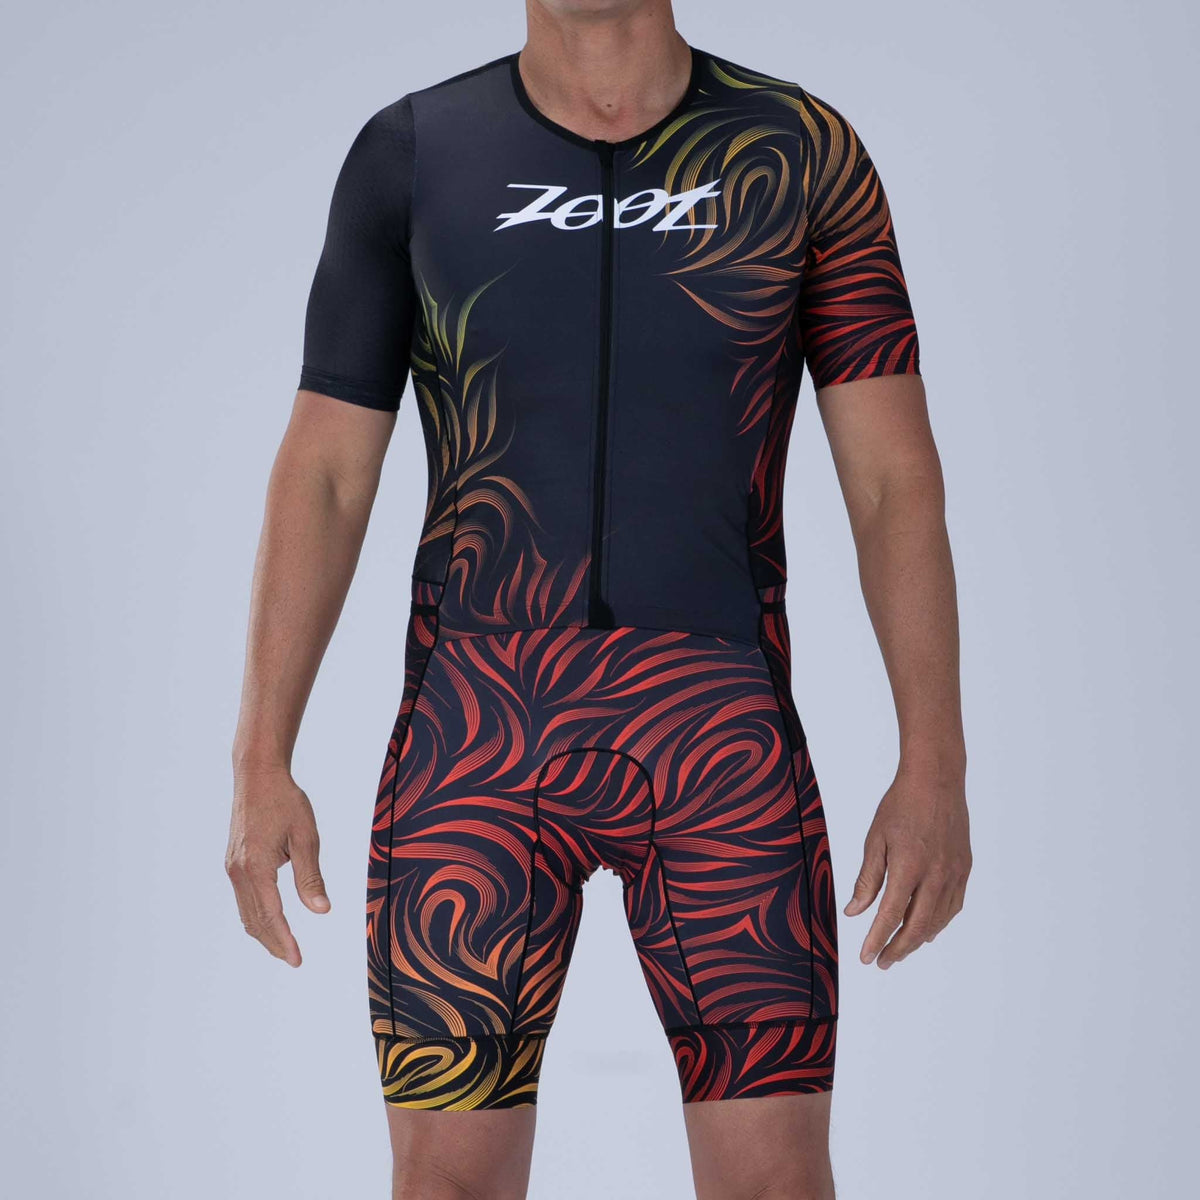 Men's Ltd Tri Aero Fz Racesuit - Phoenix